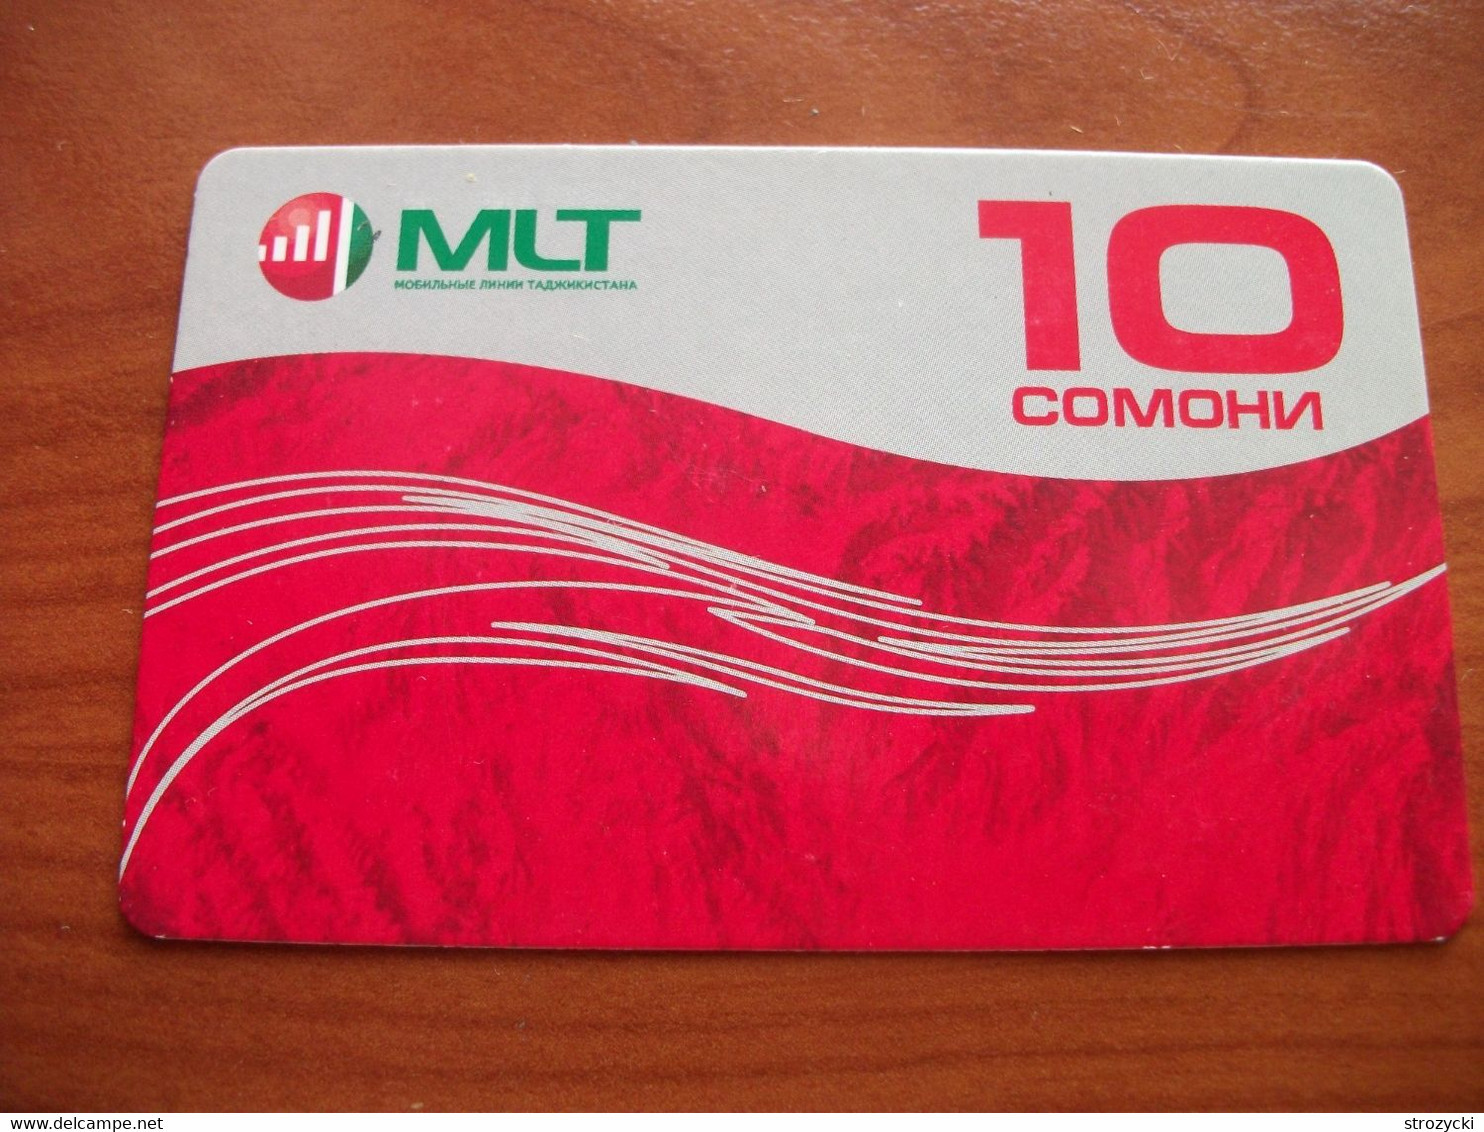 Tajikistan - MLT - 10SM - Tayijistán